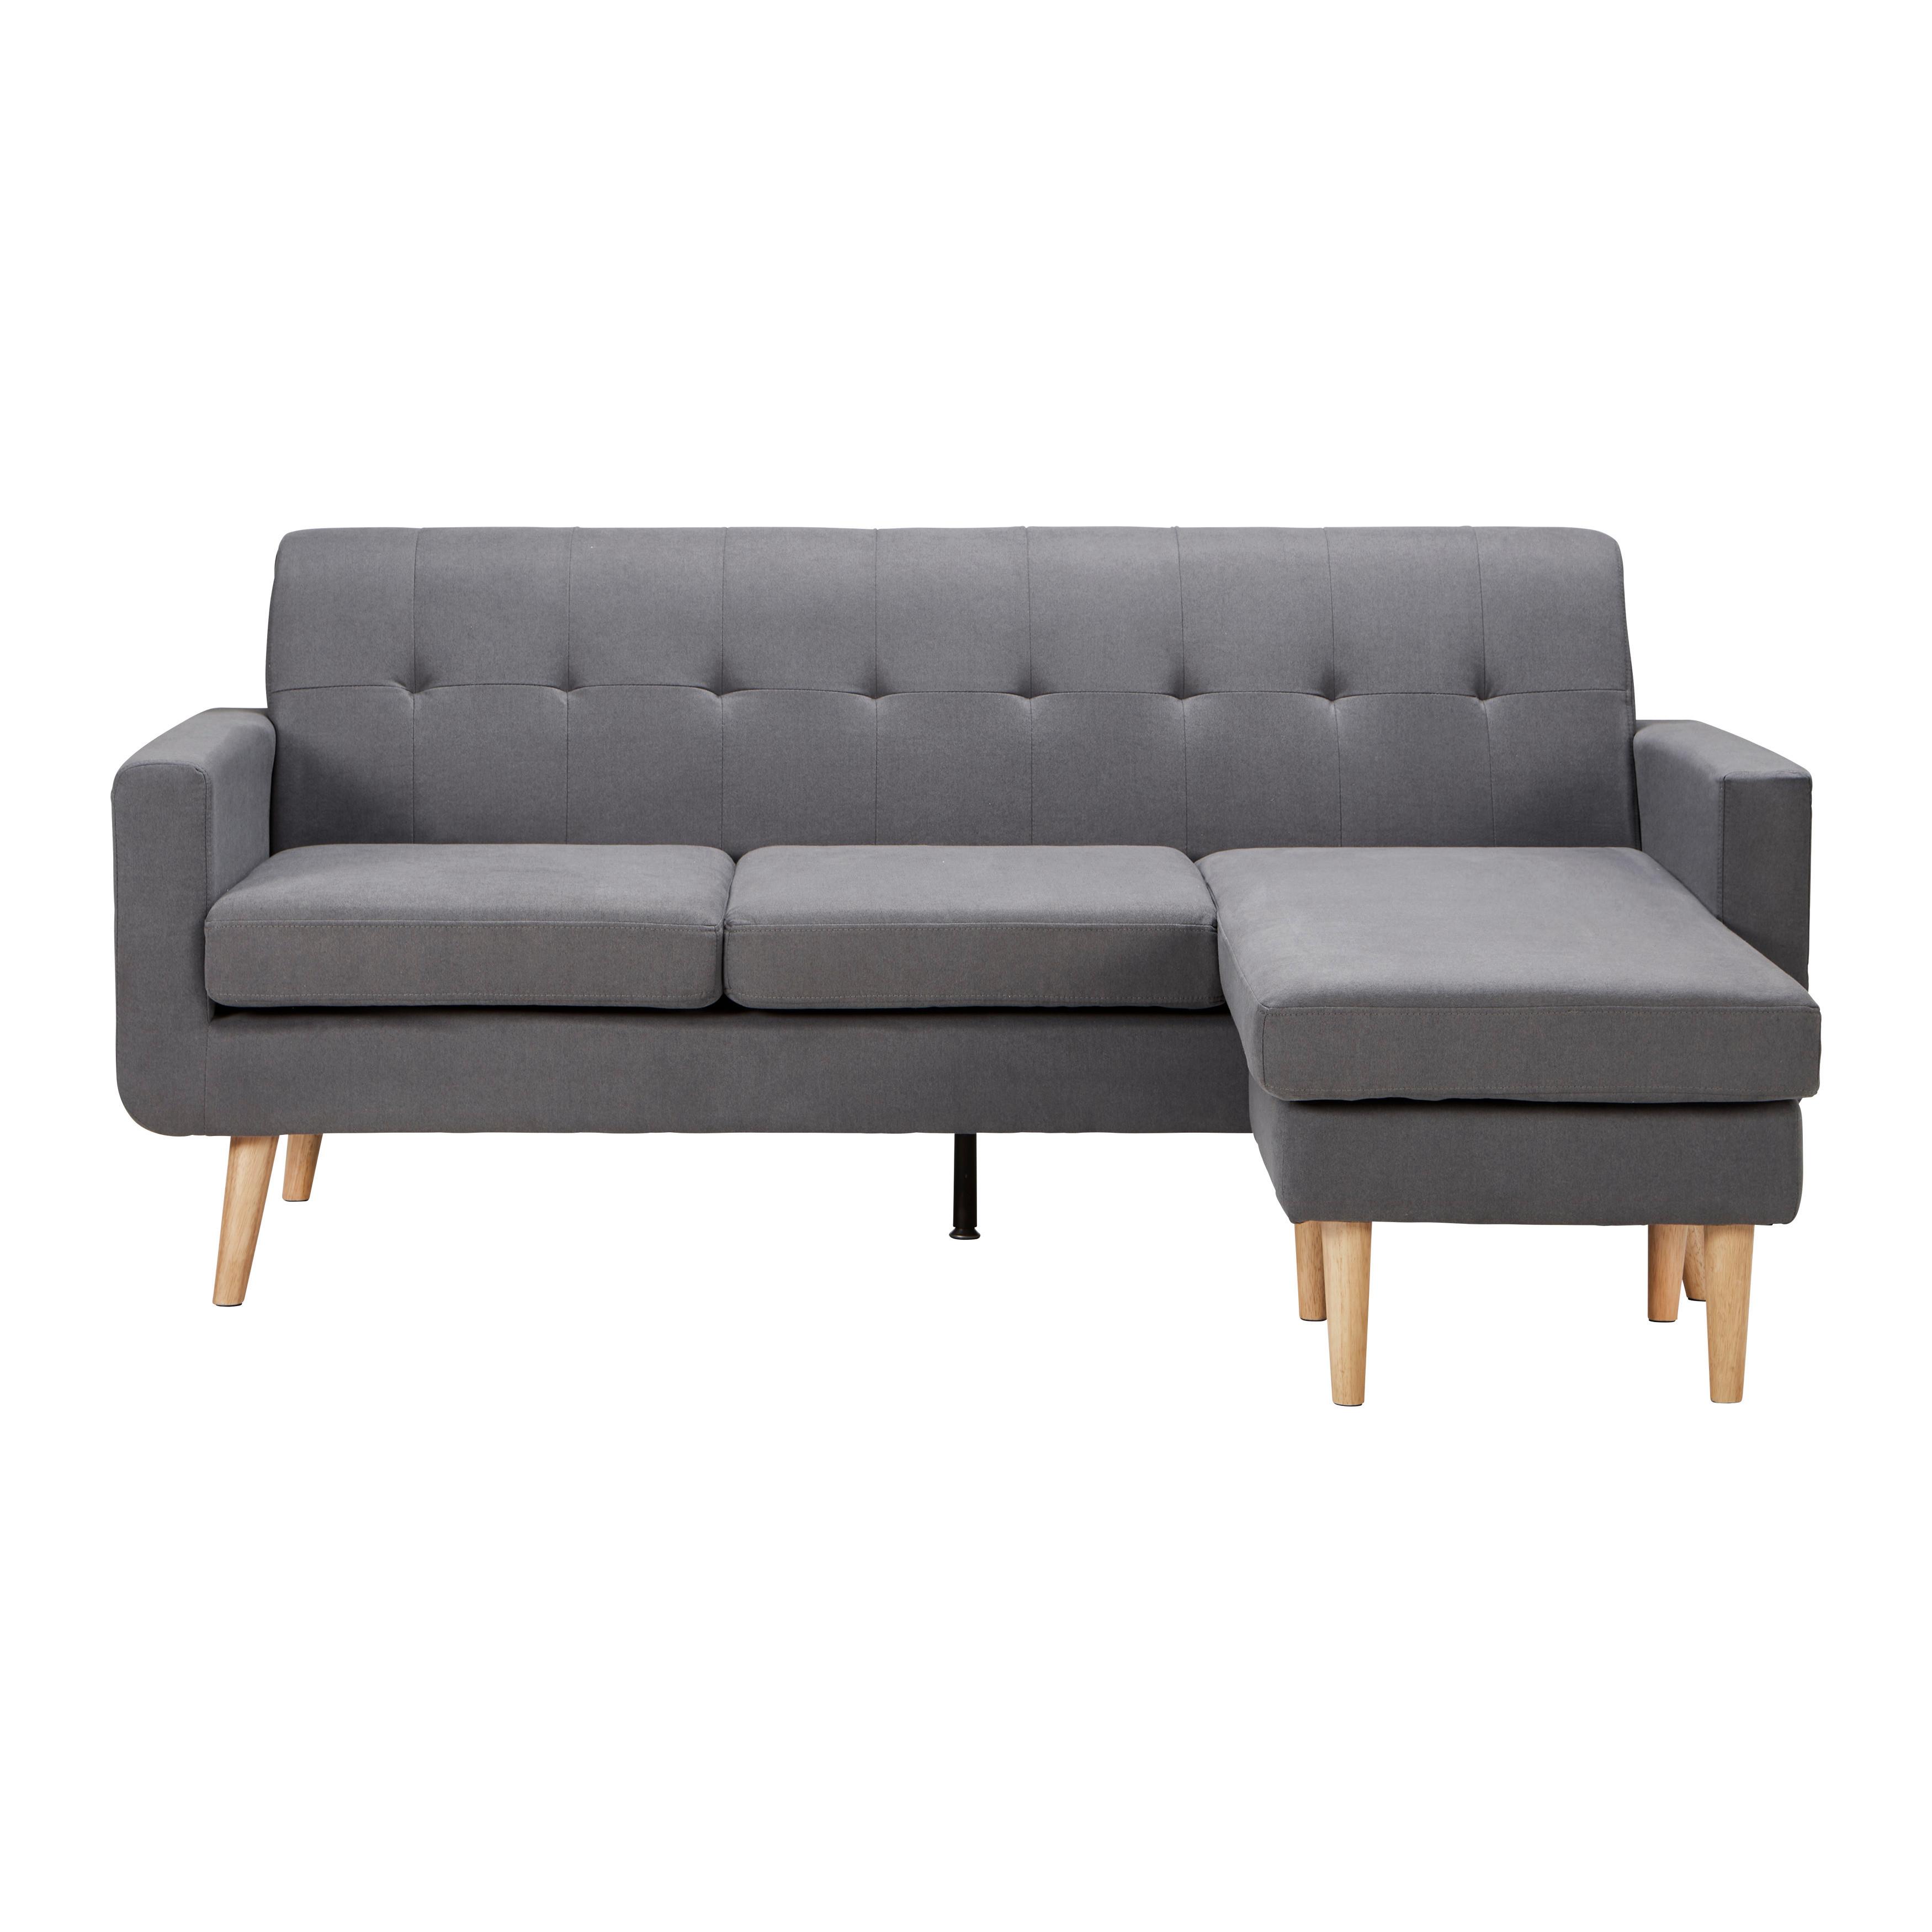 Sedežna Garnitura Tamara, Oblika L - temno siva/siva, Moderno, tekstil/les (196/82/143cm) - Bessagi Home